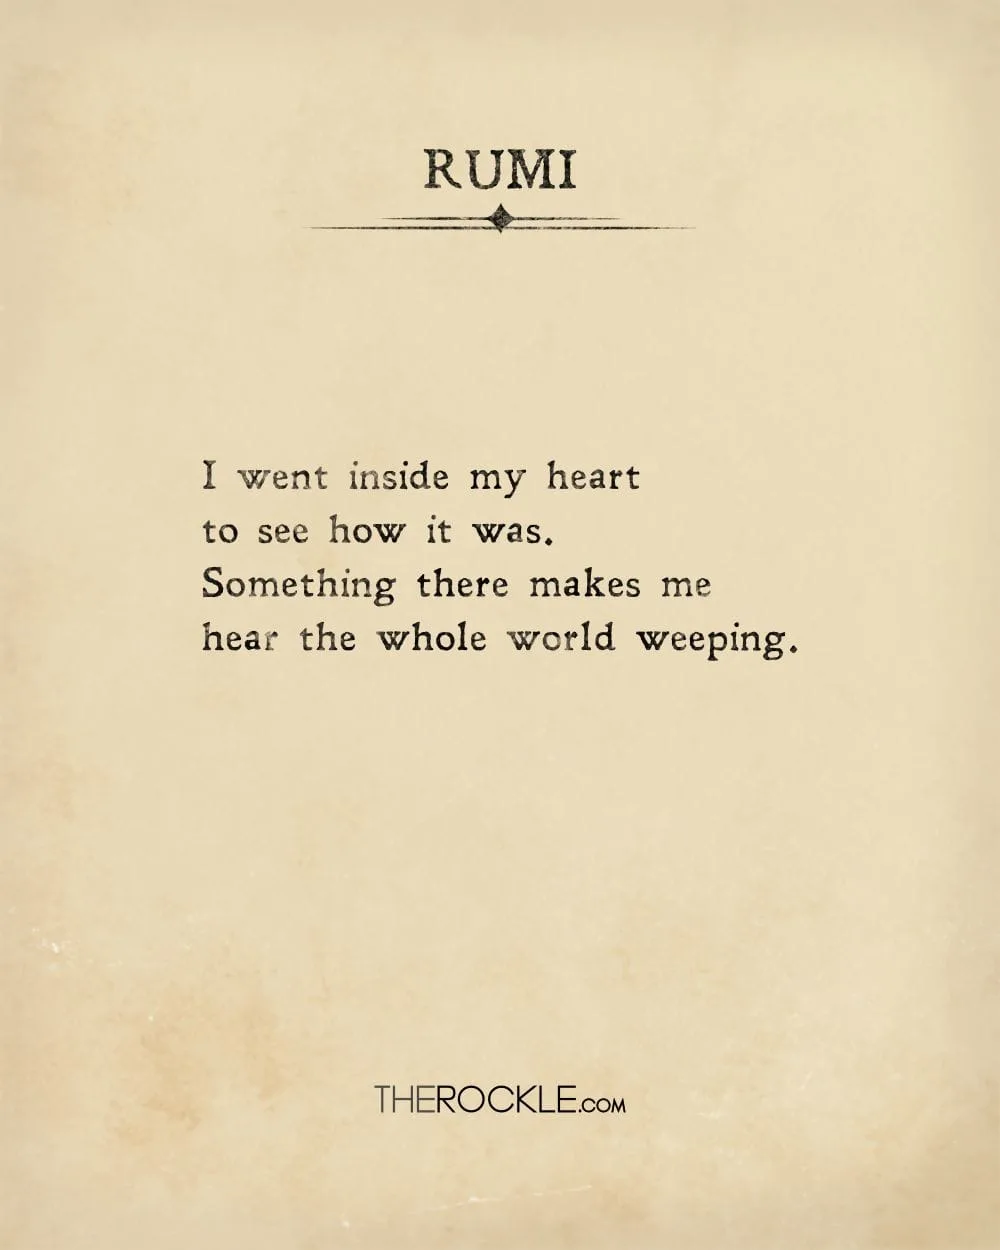 Rumi on deep self-reflection and empathy